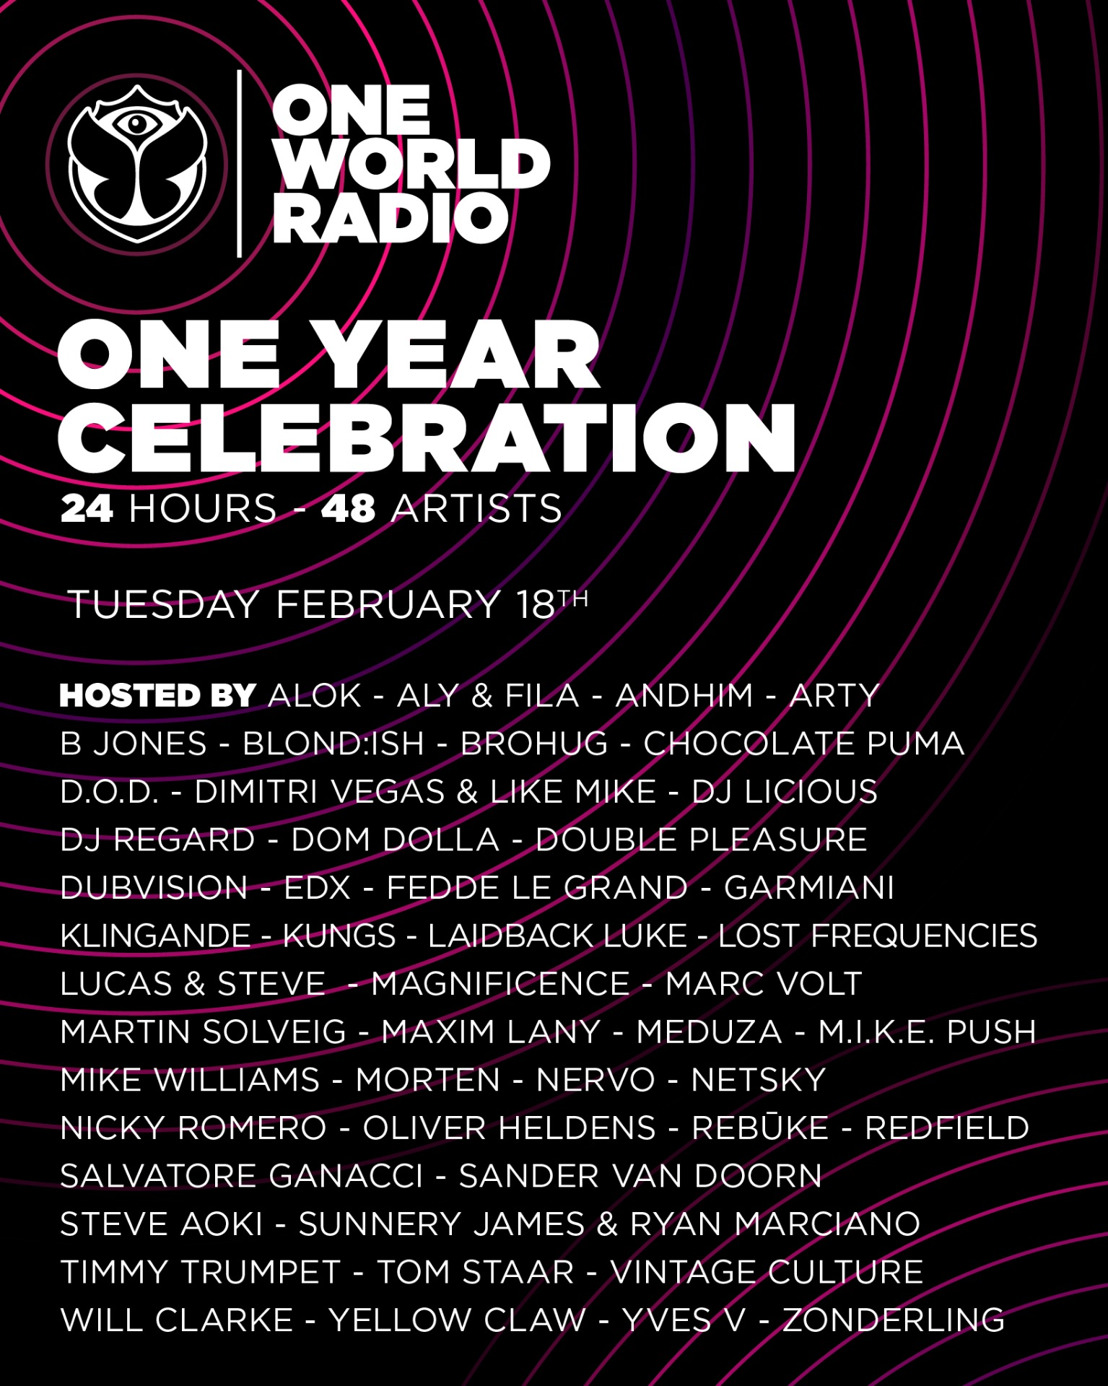 One World Radio is celebrating its 1st anniversary